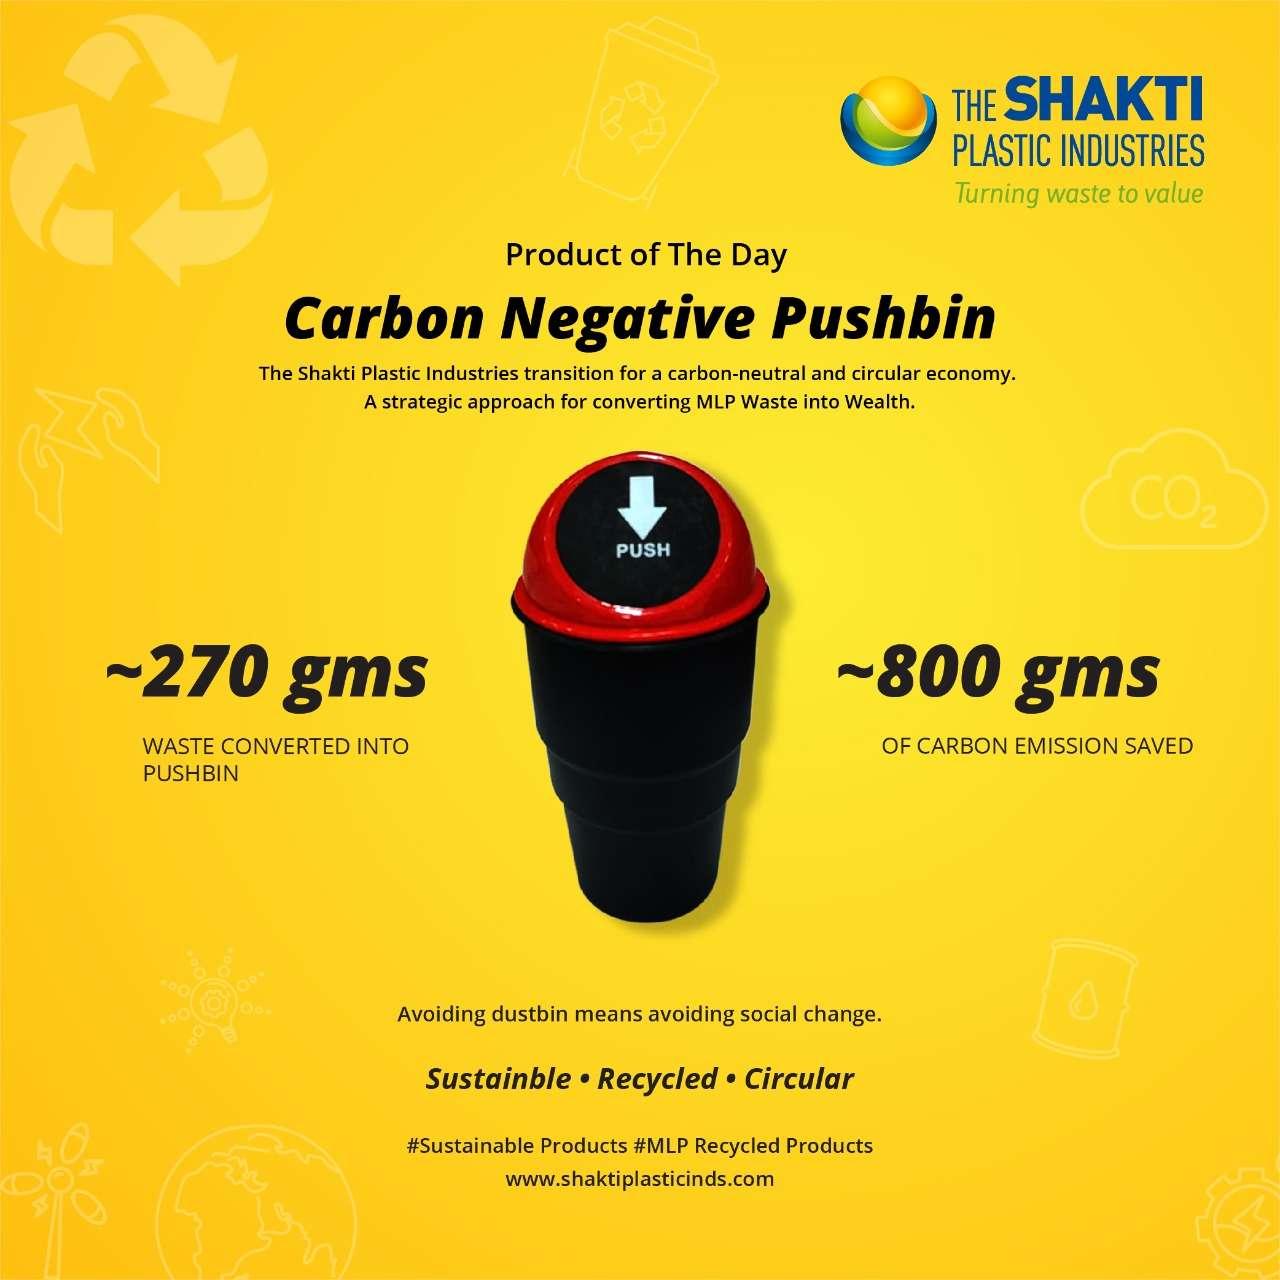 Product Recycled Plastic Pushbin | Carbon Negative Pushbin - The Shakti Plastic Industries image